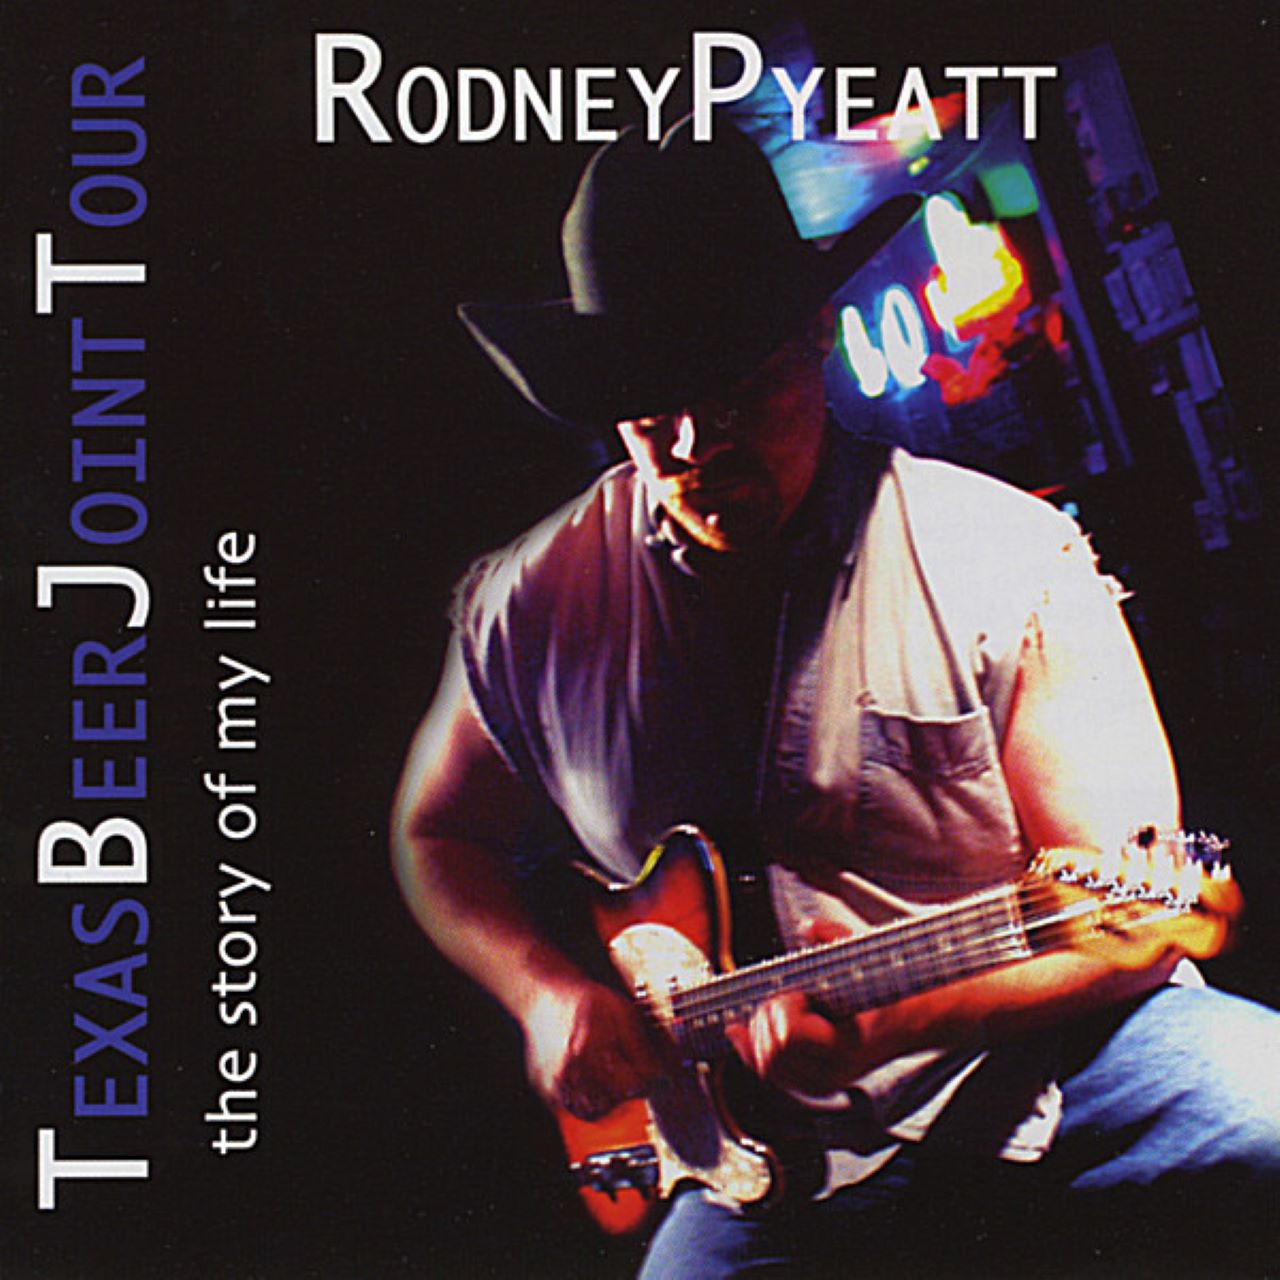 Rodney Pyeatt - Texas Beer Joint Tour cover album